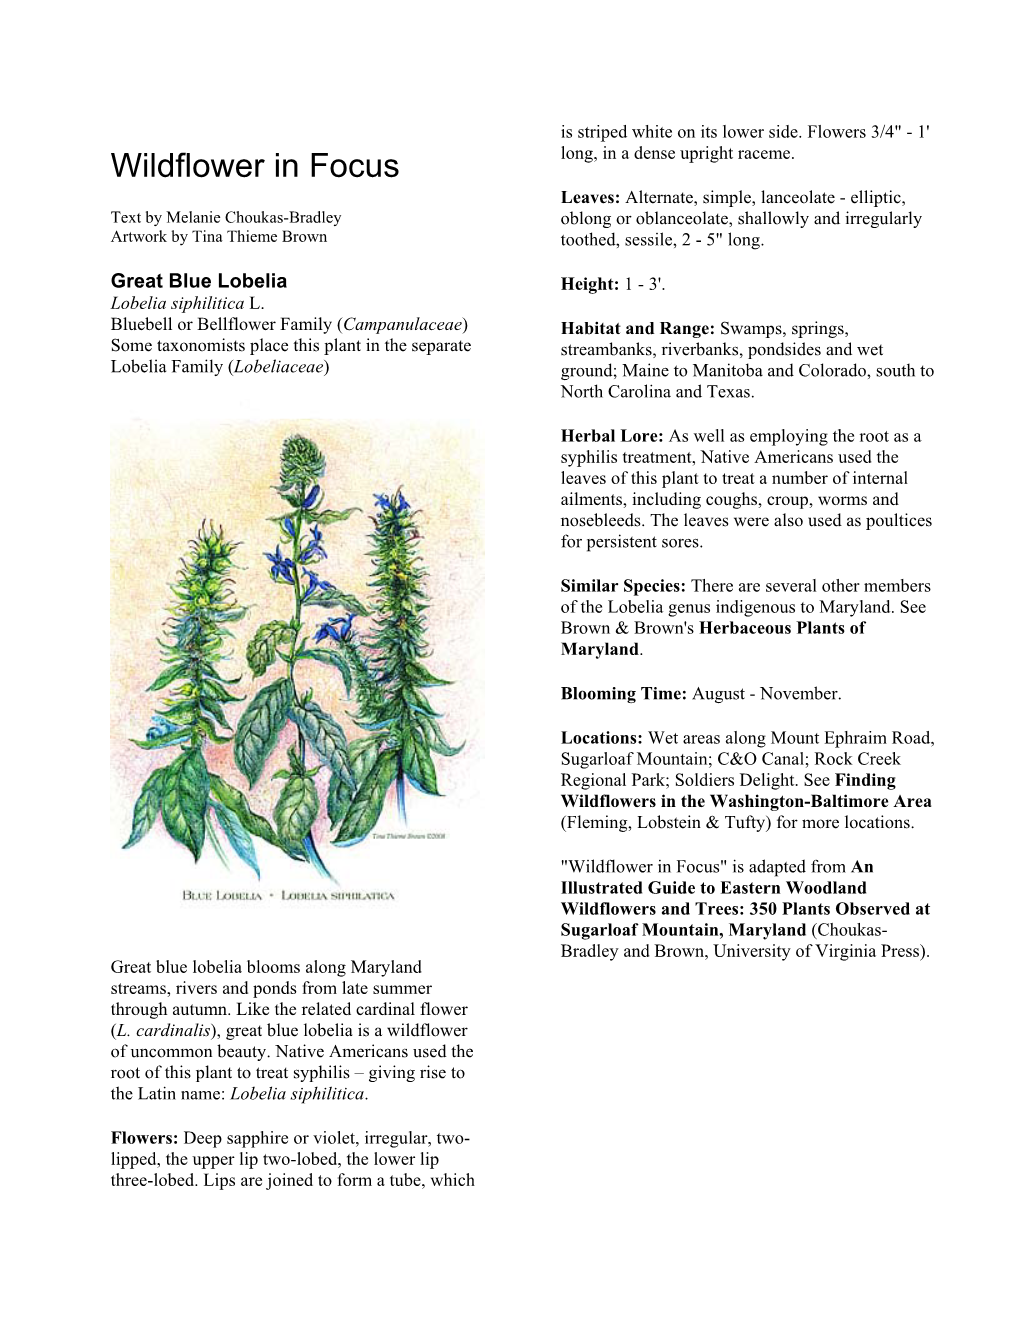 Wildflower in Focus: Blue Lobelia